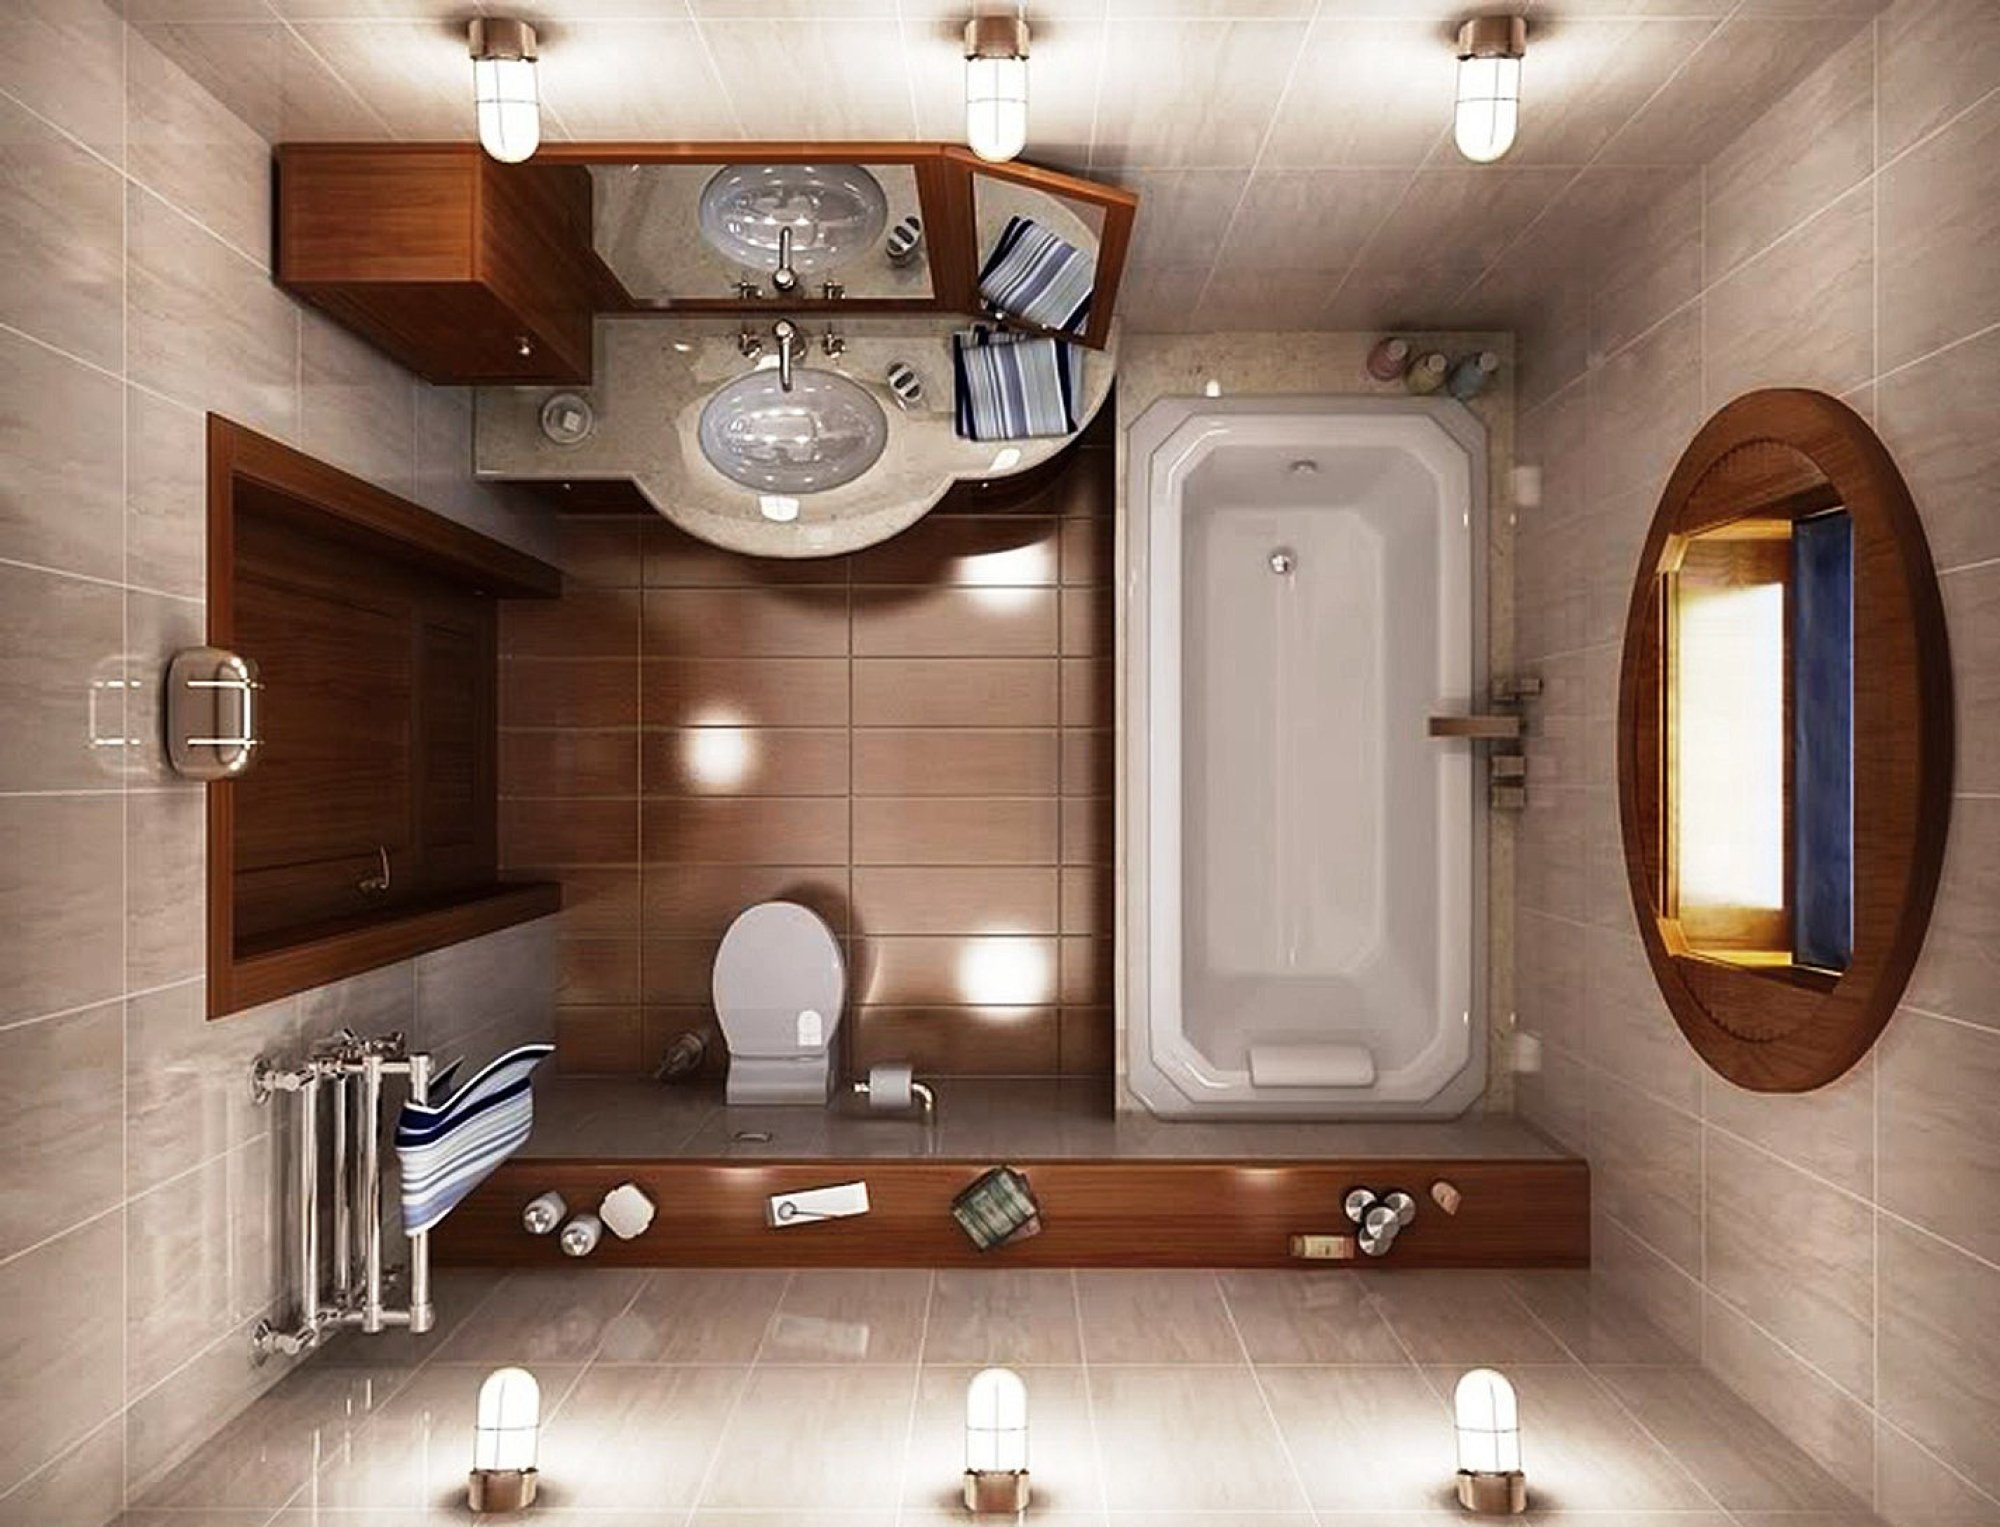 Ванная комната дизайн мал размер. Планировка ванной комнаты. Ванная с санузлом. Небольшие Ванные комнаты. Расположение в ванной комнате.